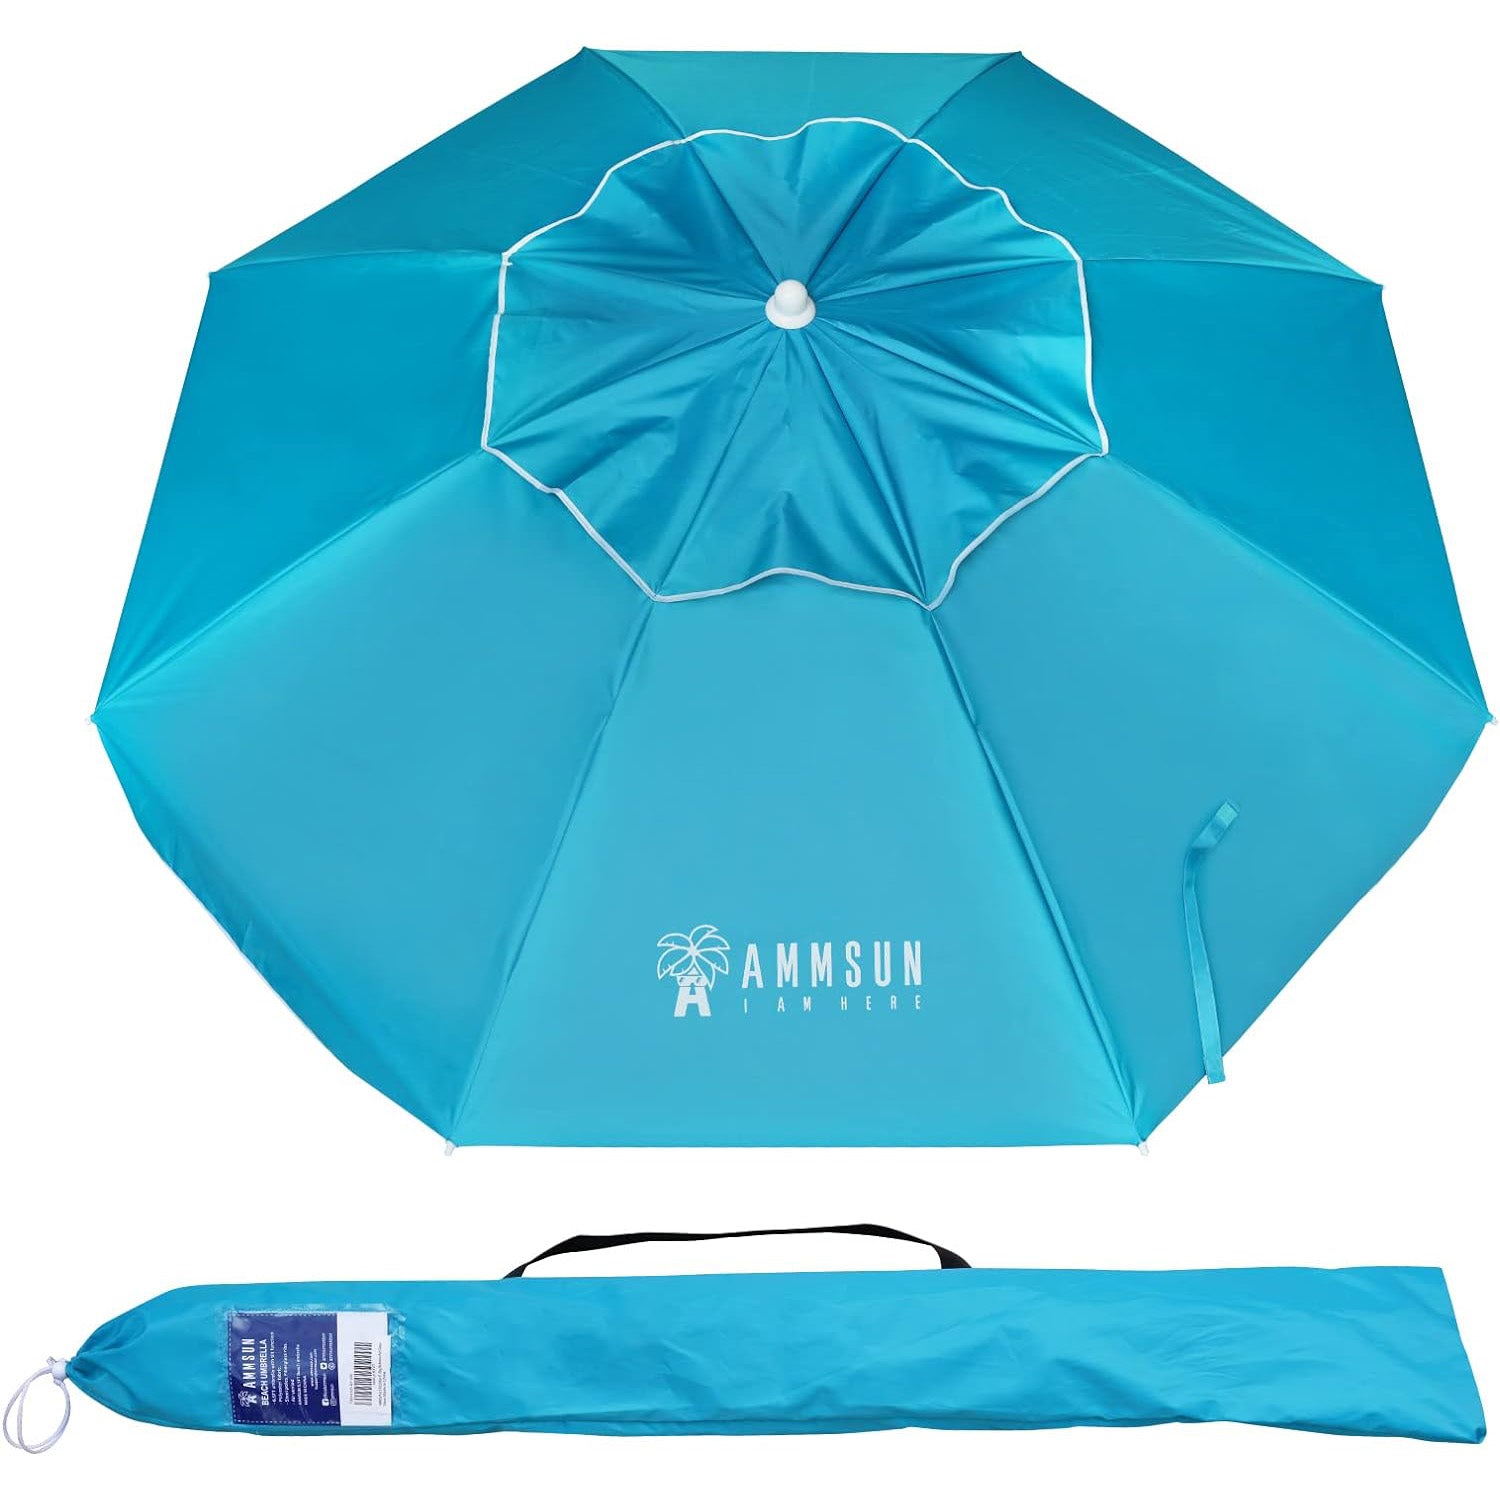 AMMSUN 6.5ft Outdoor Umbrella Sky Blue